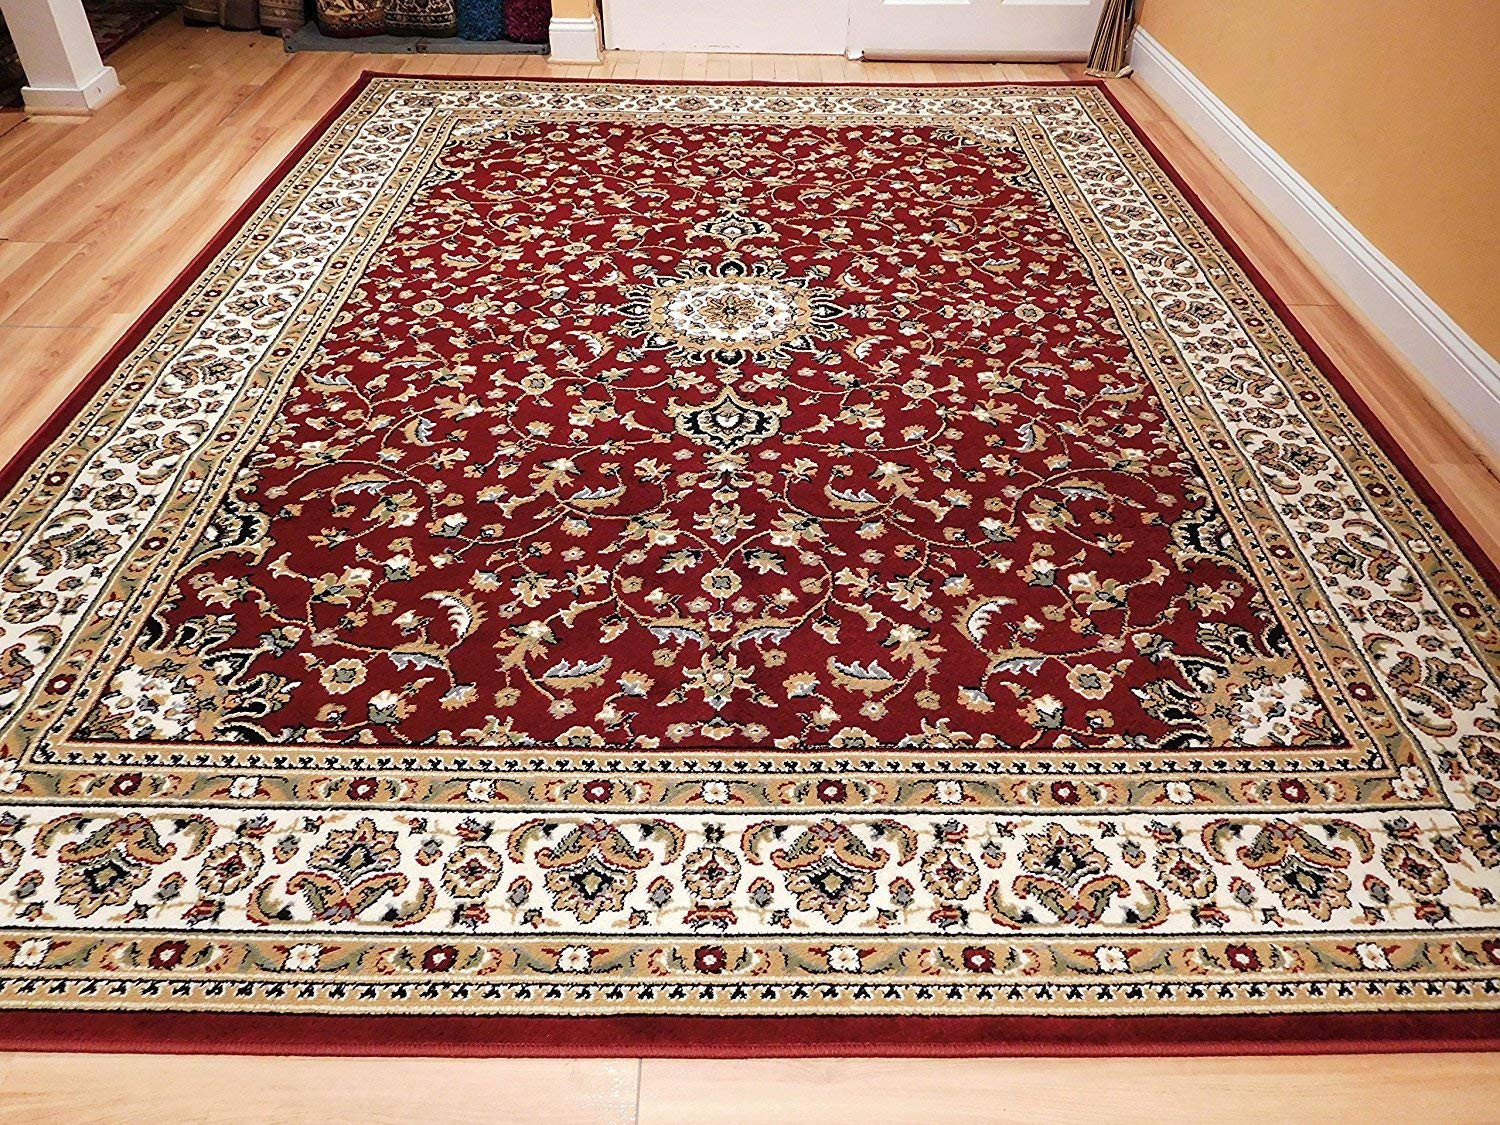 large rug amazon.com: large 5x8 red cream beige black isfahan area rug oriental  carpet FLBAIUT